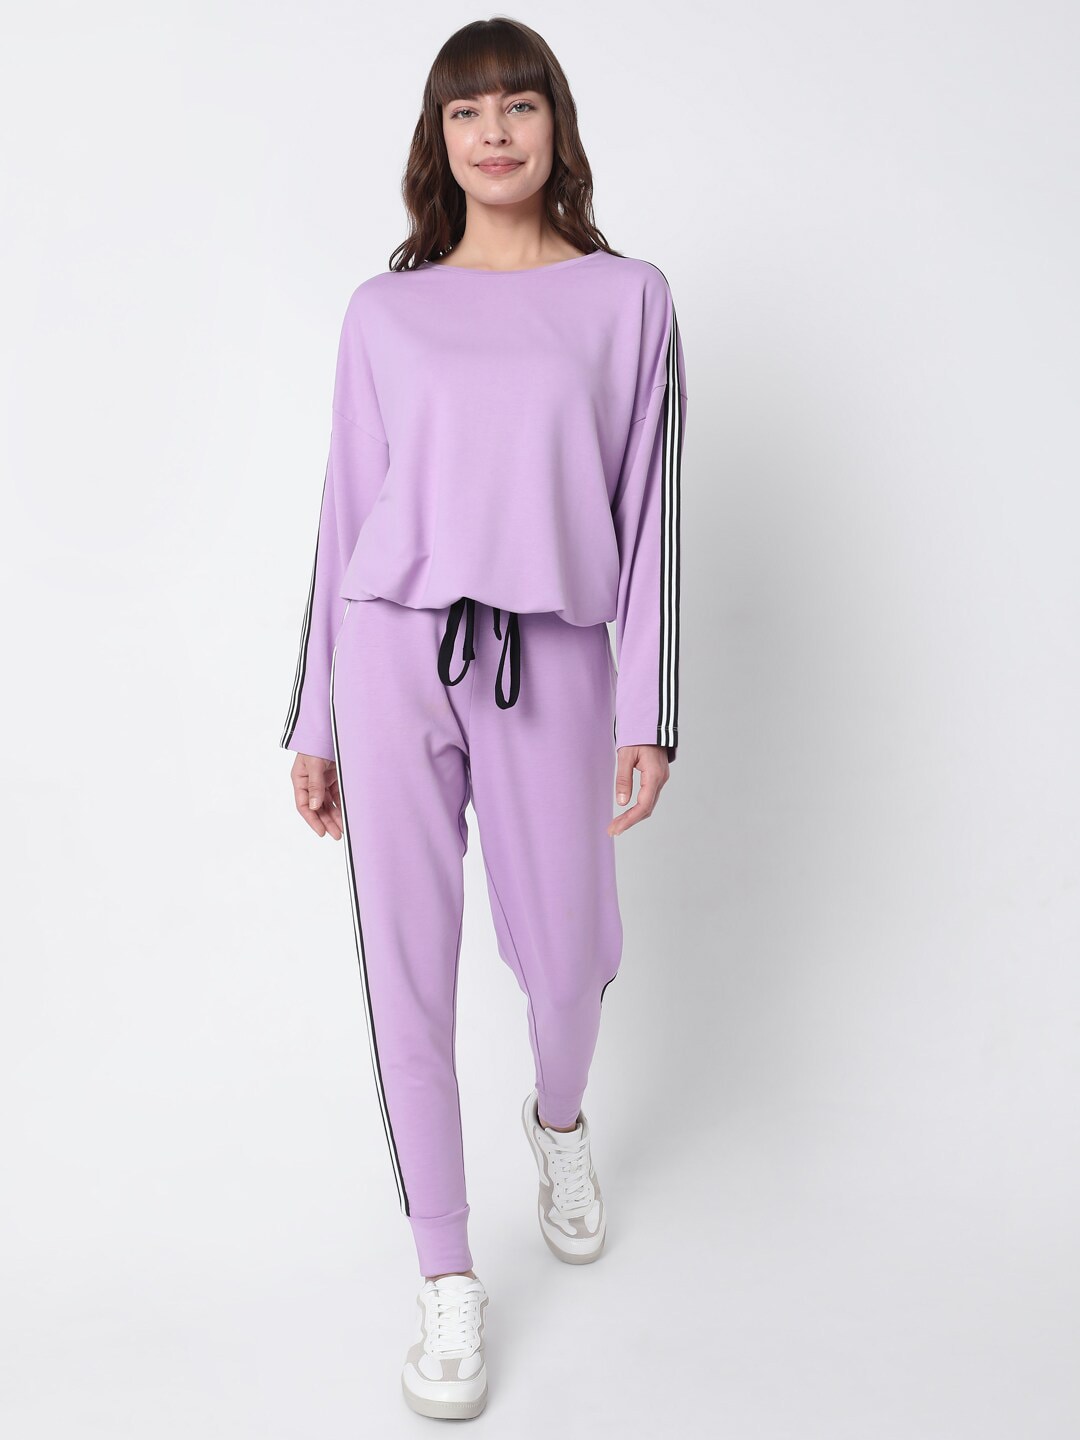 Vero Moda Women Purple Sweatshirt Price in India